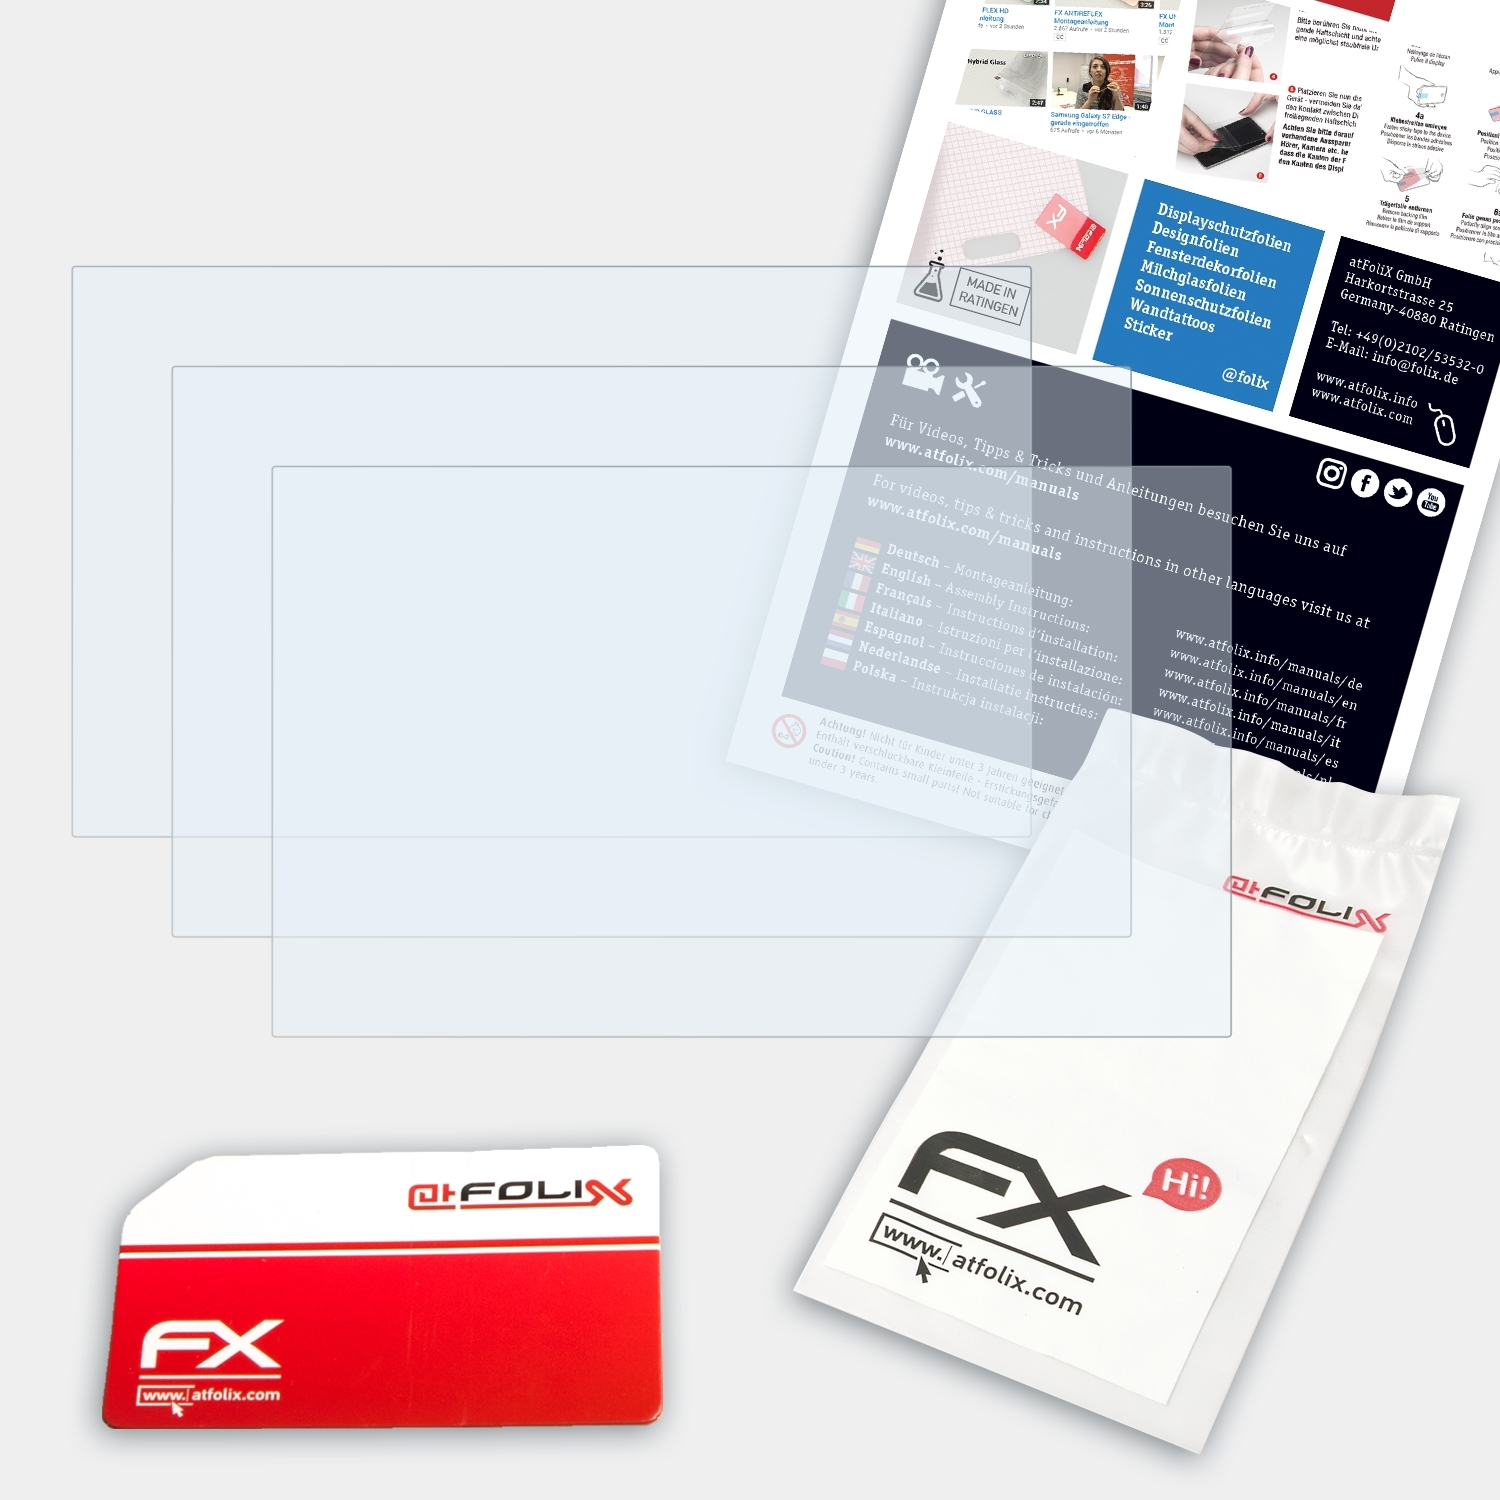 ATFOLIX Alpine Displayschutz(für 3x X800D-U) FX-Clear